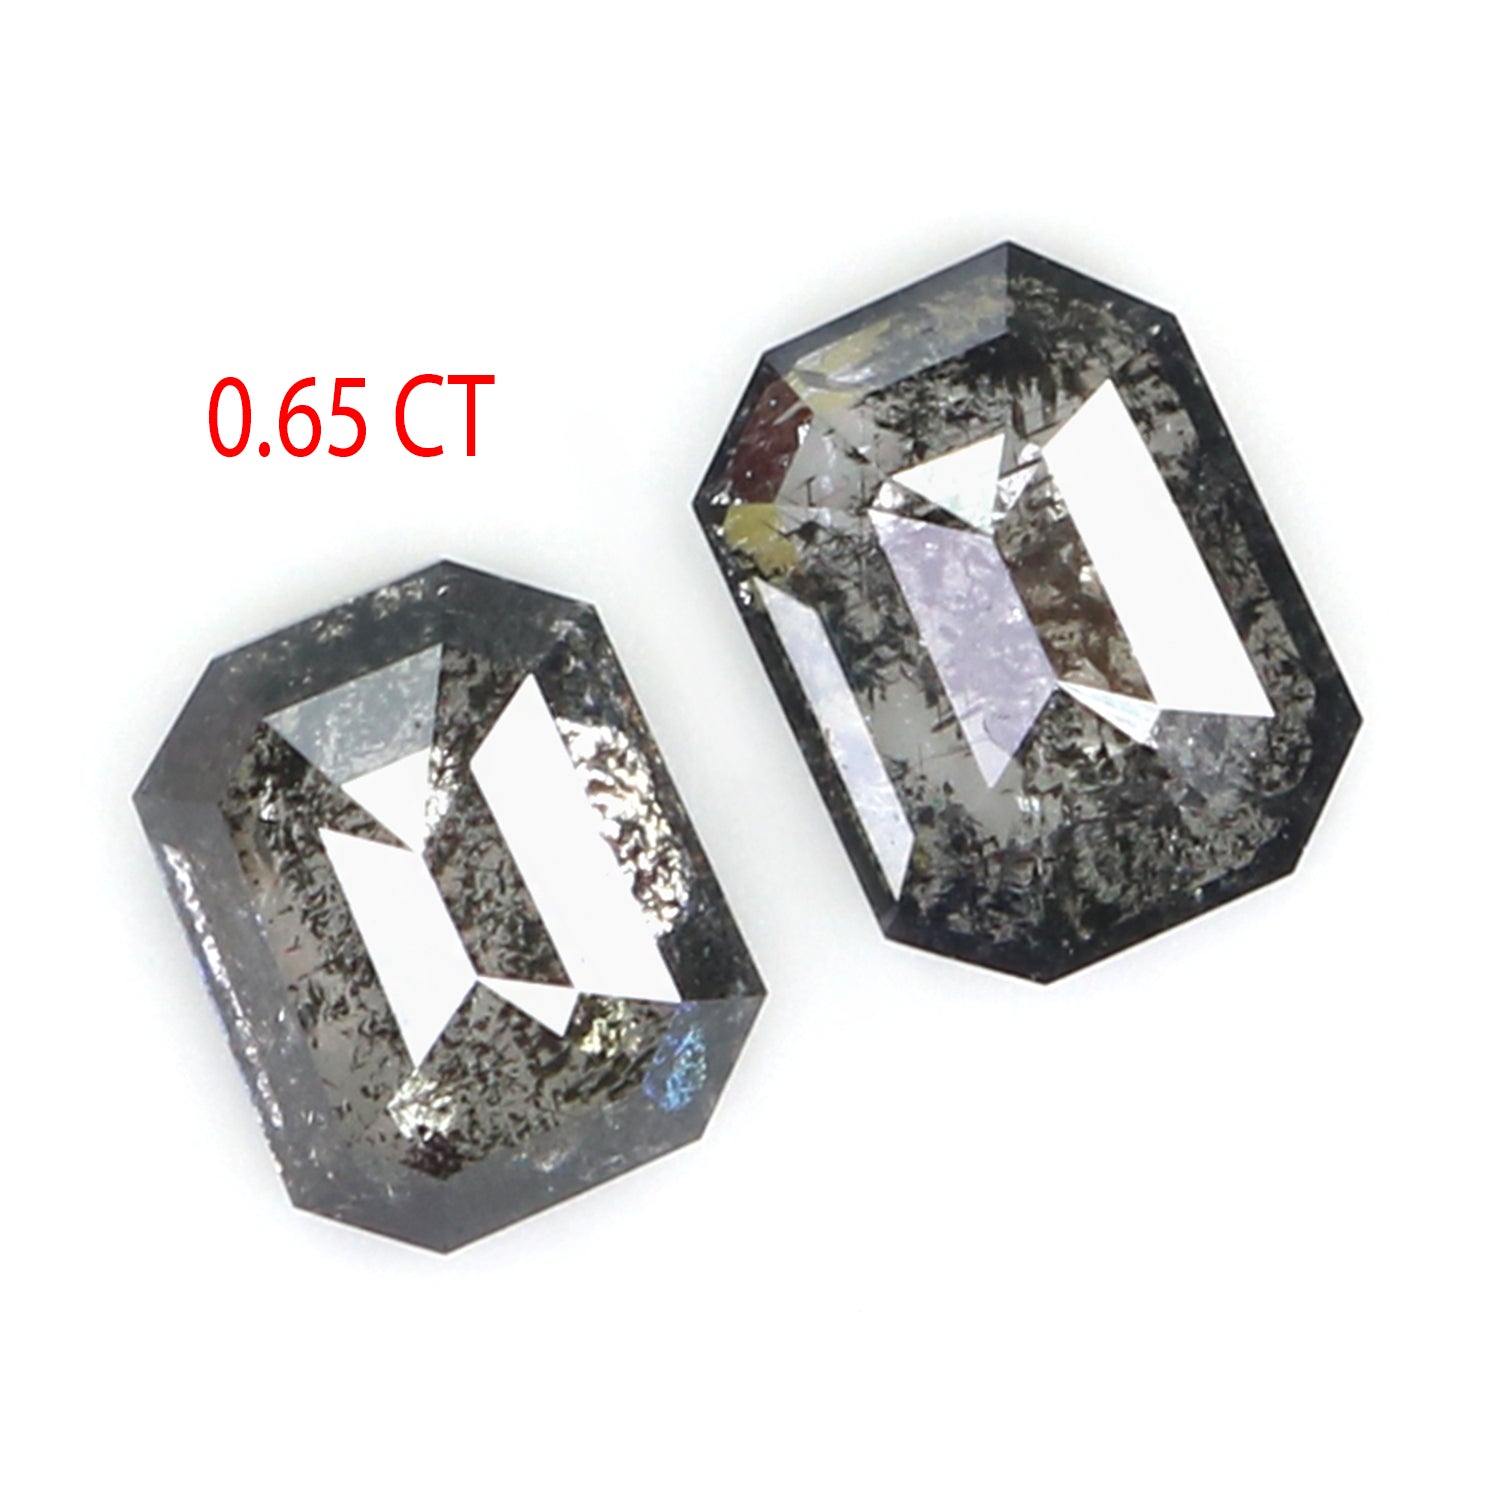 0.65 CT Natural Loose Emerald Pair Diamond Black Grey Color Emerald Cut Diamond 4.45 MM Salt And Pepper Diamond Emerald Pair Diamond QL2544